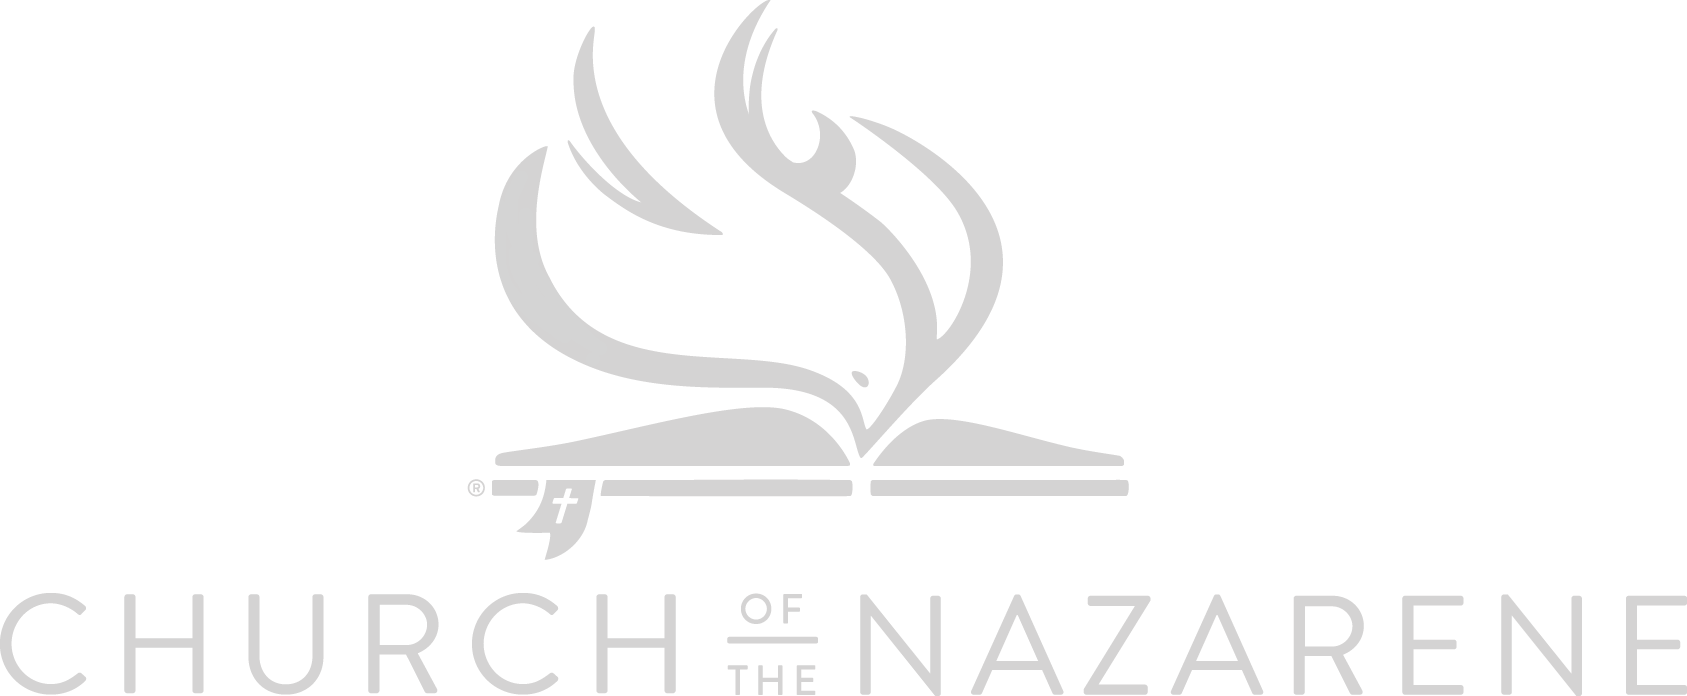 San Francisco Chinese Church of the Nazarene